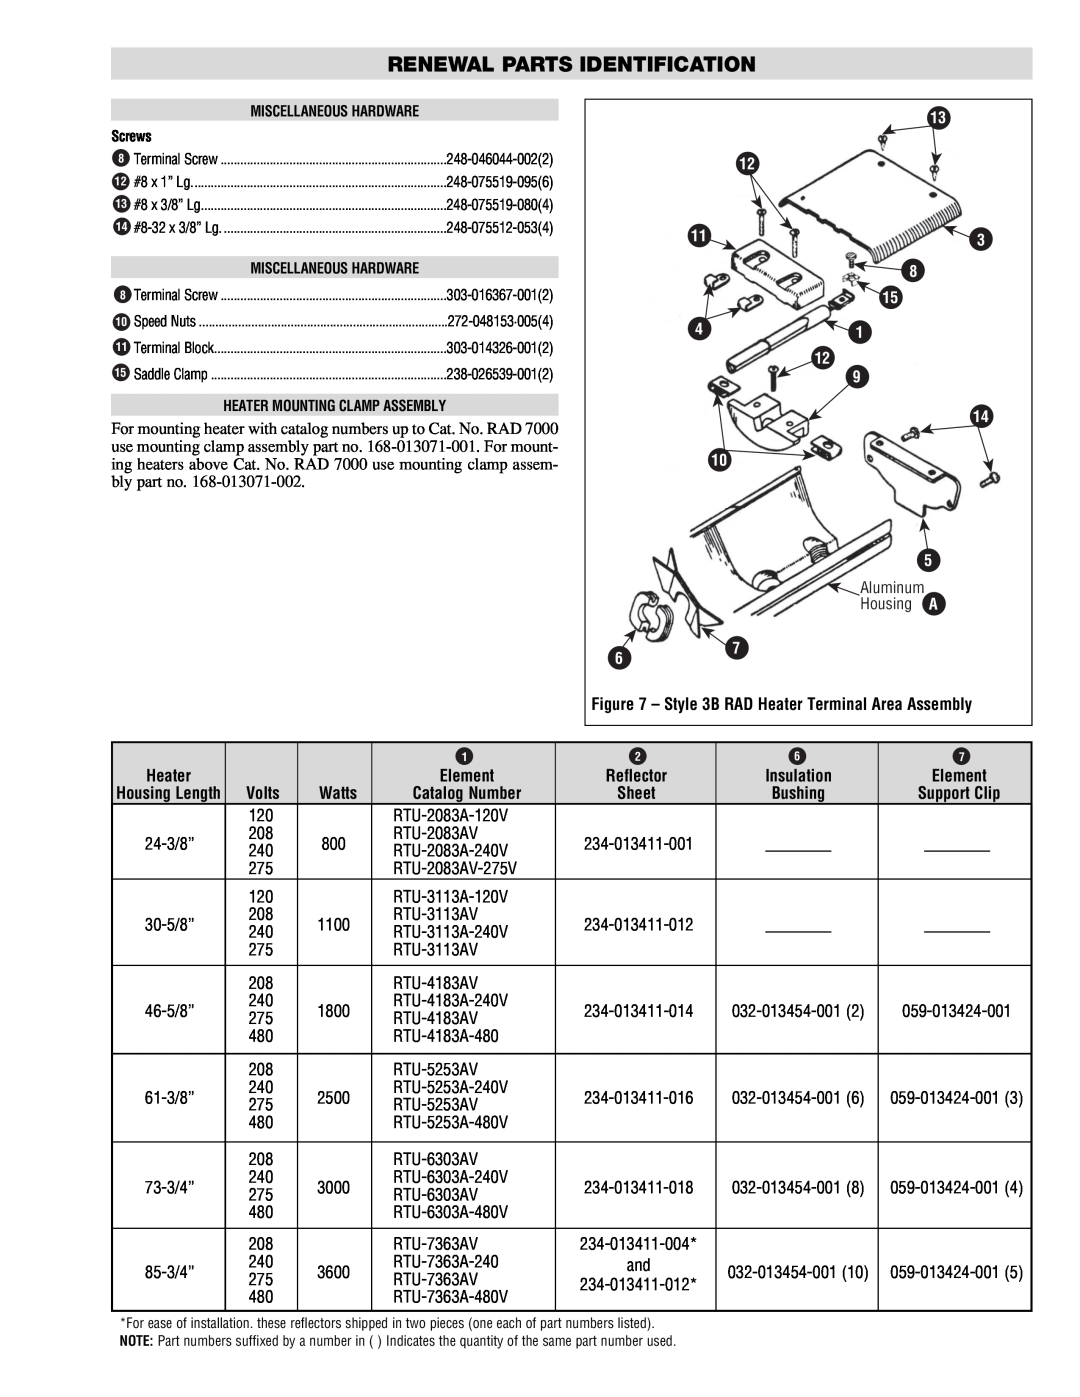 Chromalox PG407-3 manual Heater, Element, Watts, Catalog Number, Renewal Parts Identification 